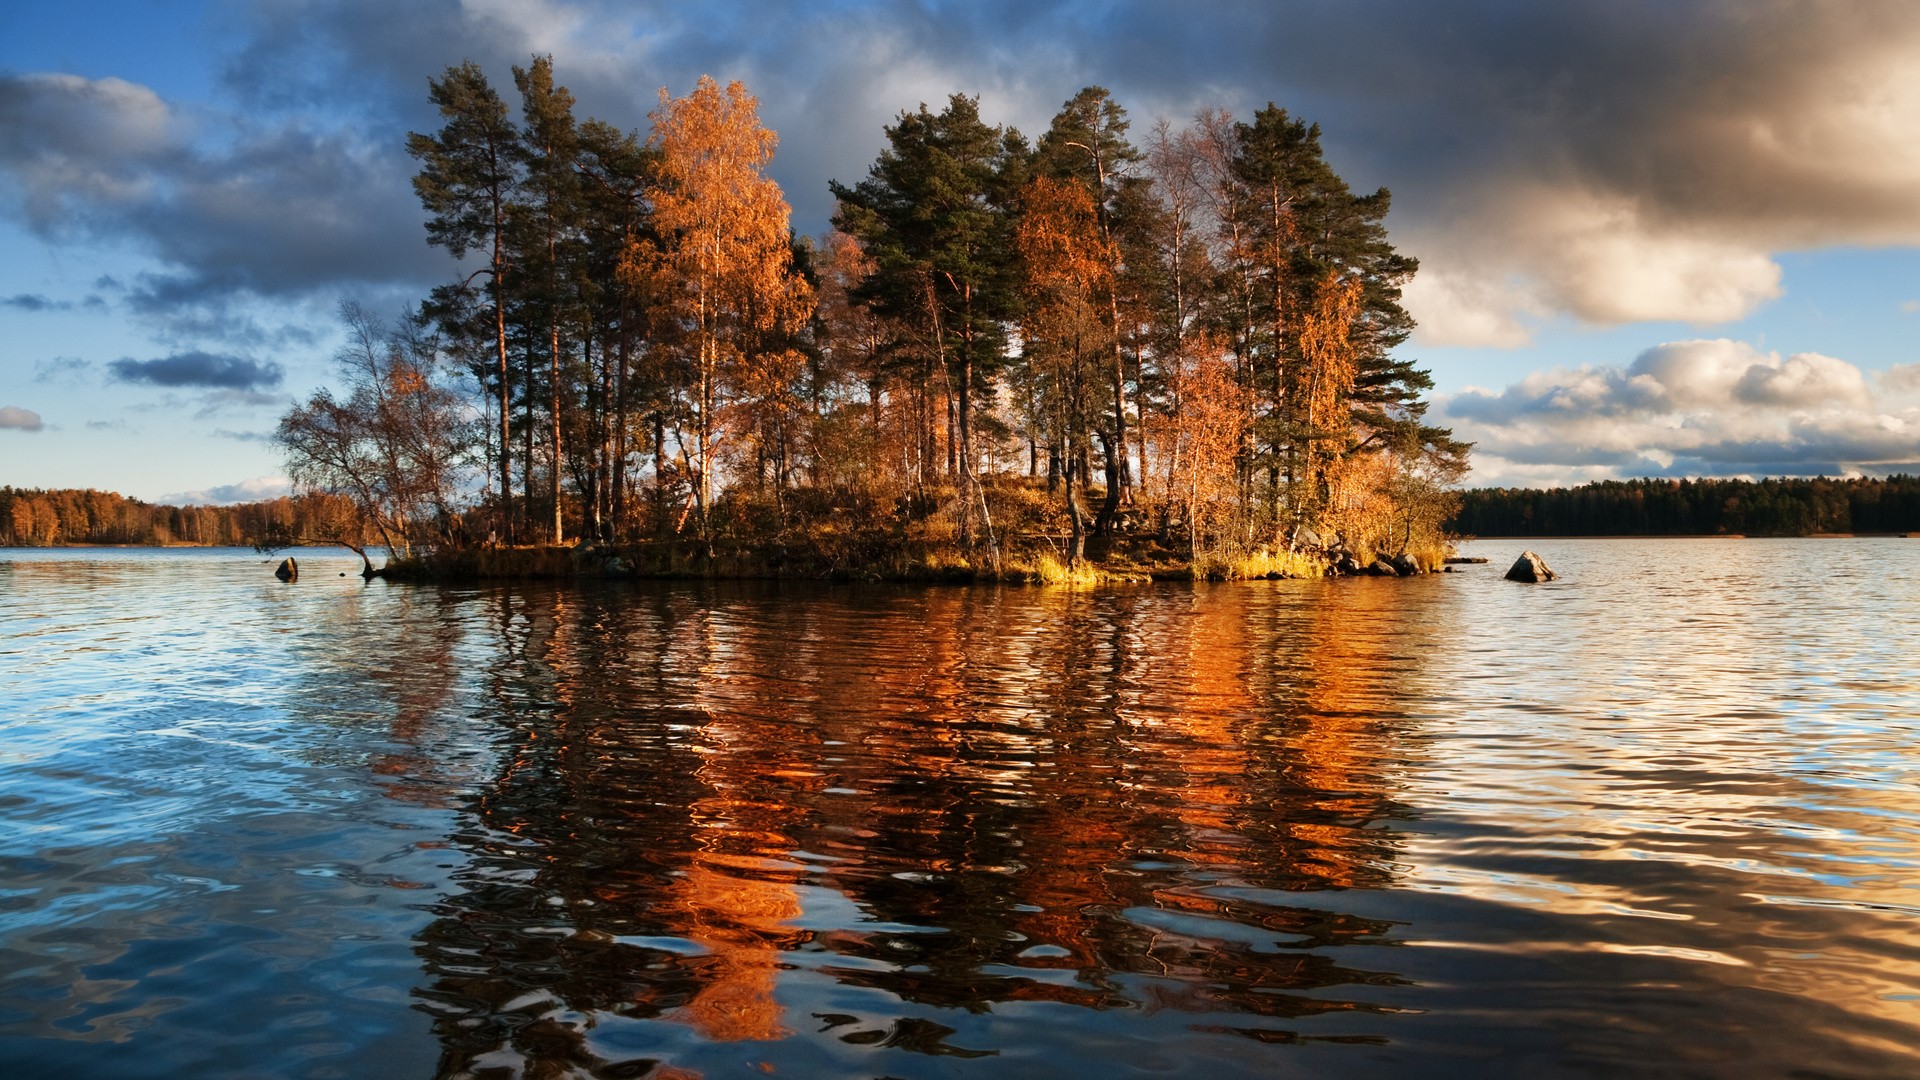 Lake Trees Autumn Fall Reflection - Fall Lake Wallpaper Hd - HD Wallpaper 